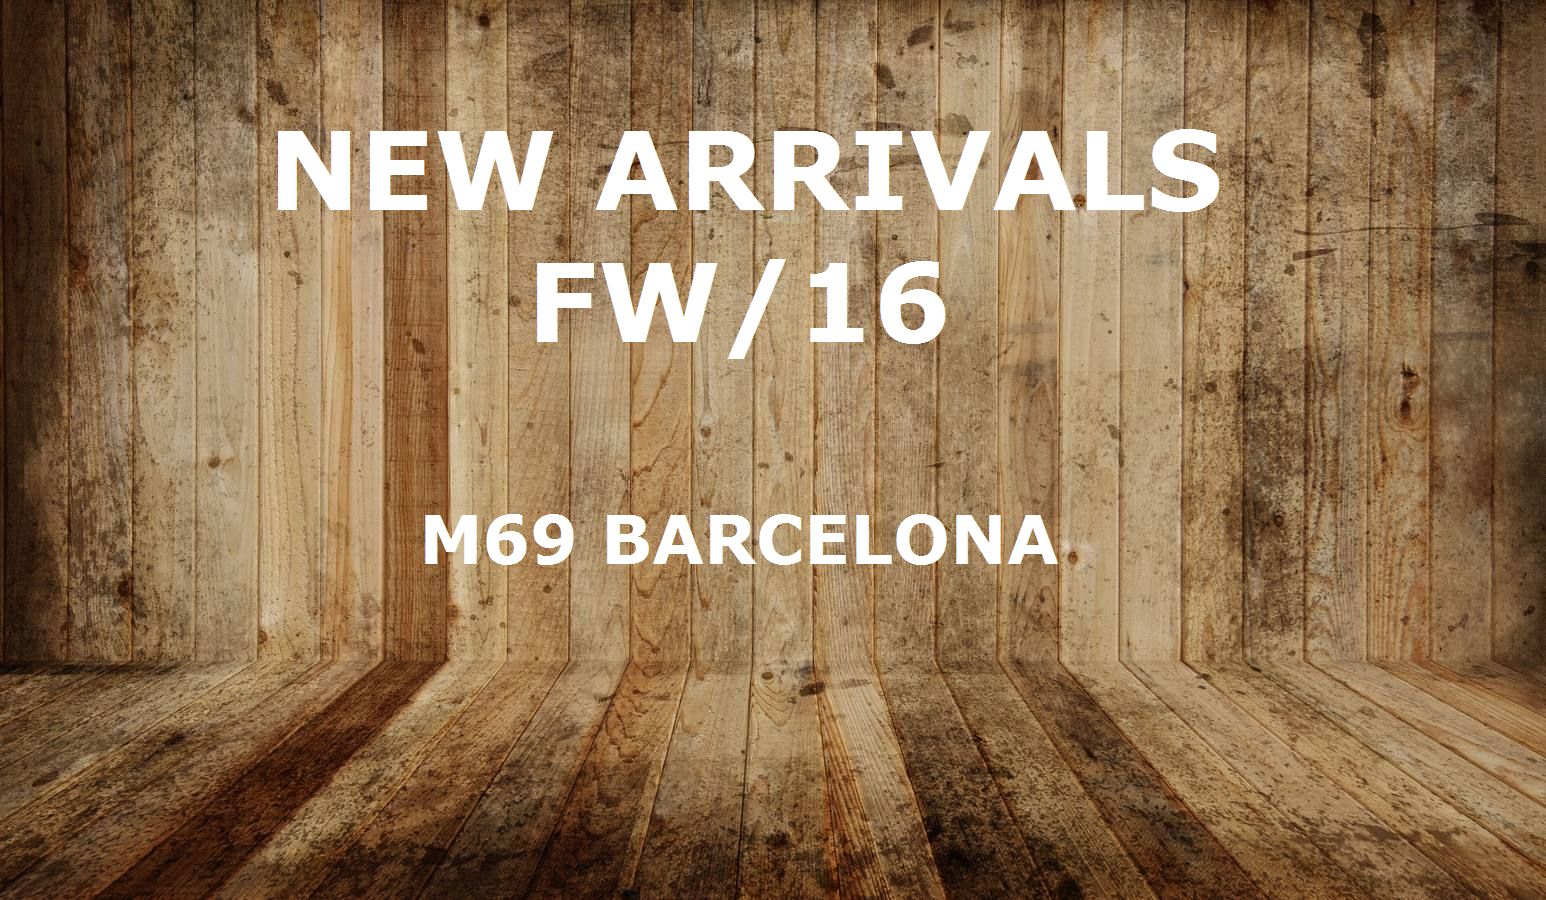 New Arrivals FW/16, M69 Barcelona